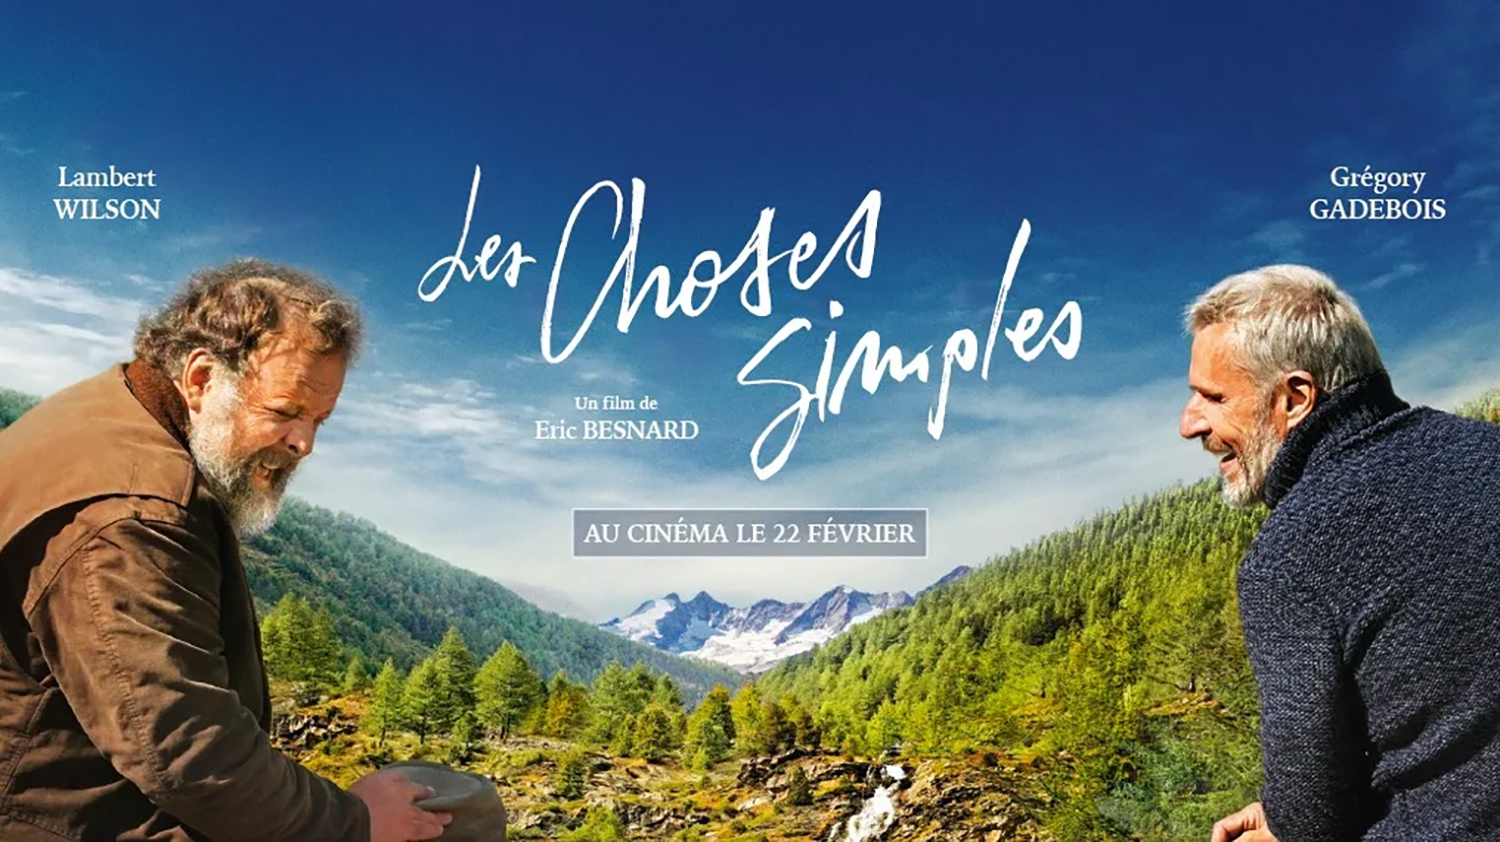 Les Choses Simples 2023: gdje se odvija snimanje filma? Da li je dostupan za streaming?